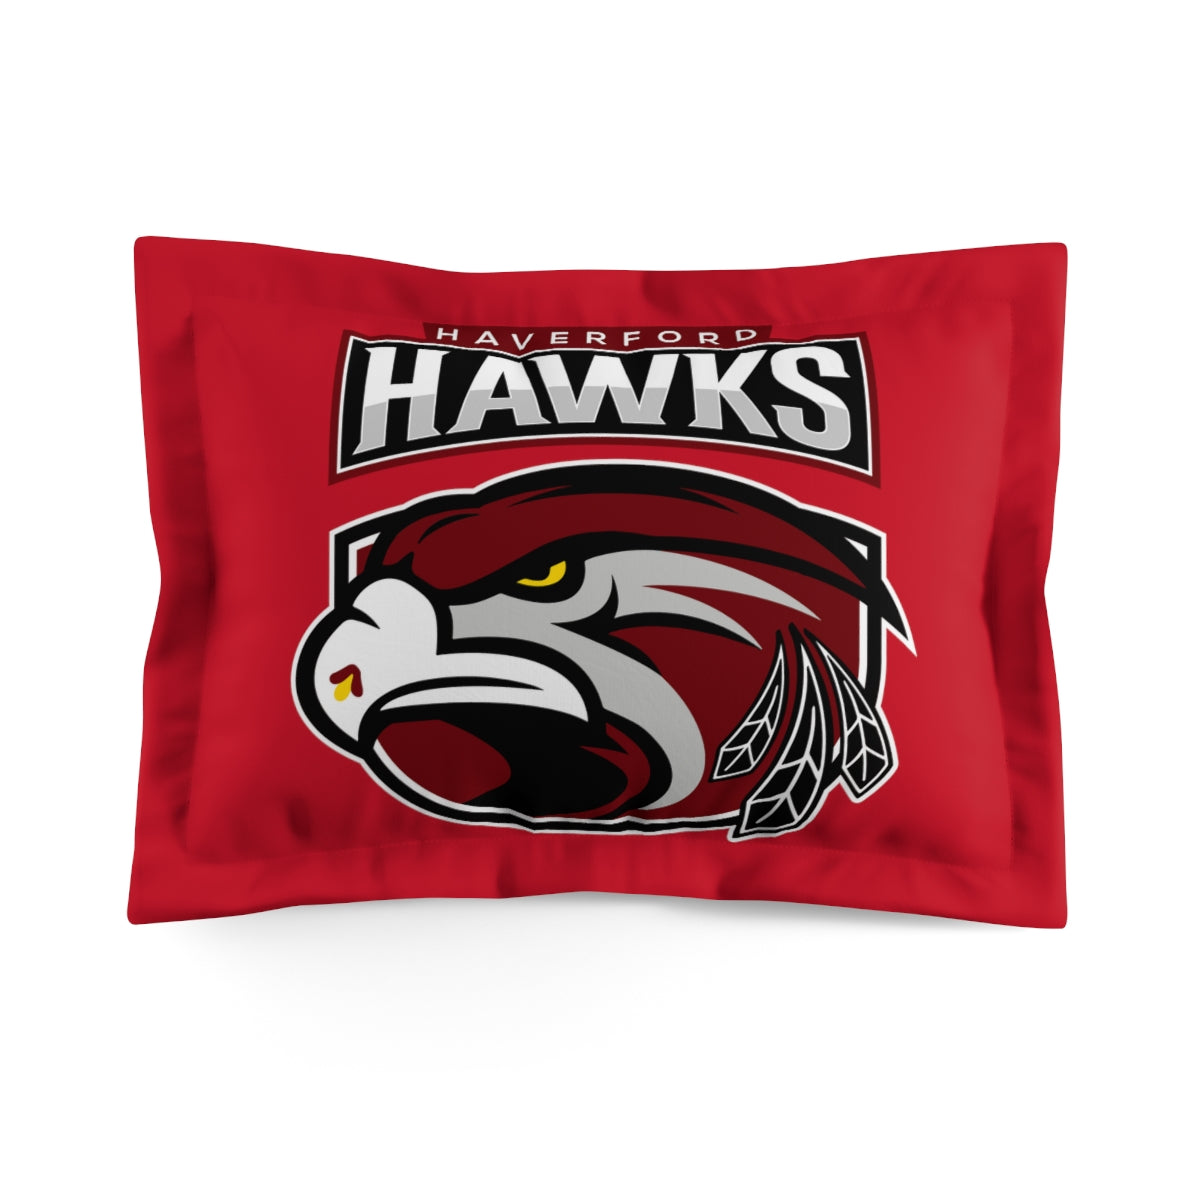 Hawks Microfiber Pillow Sham